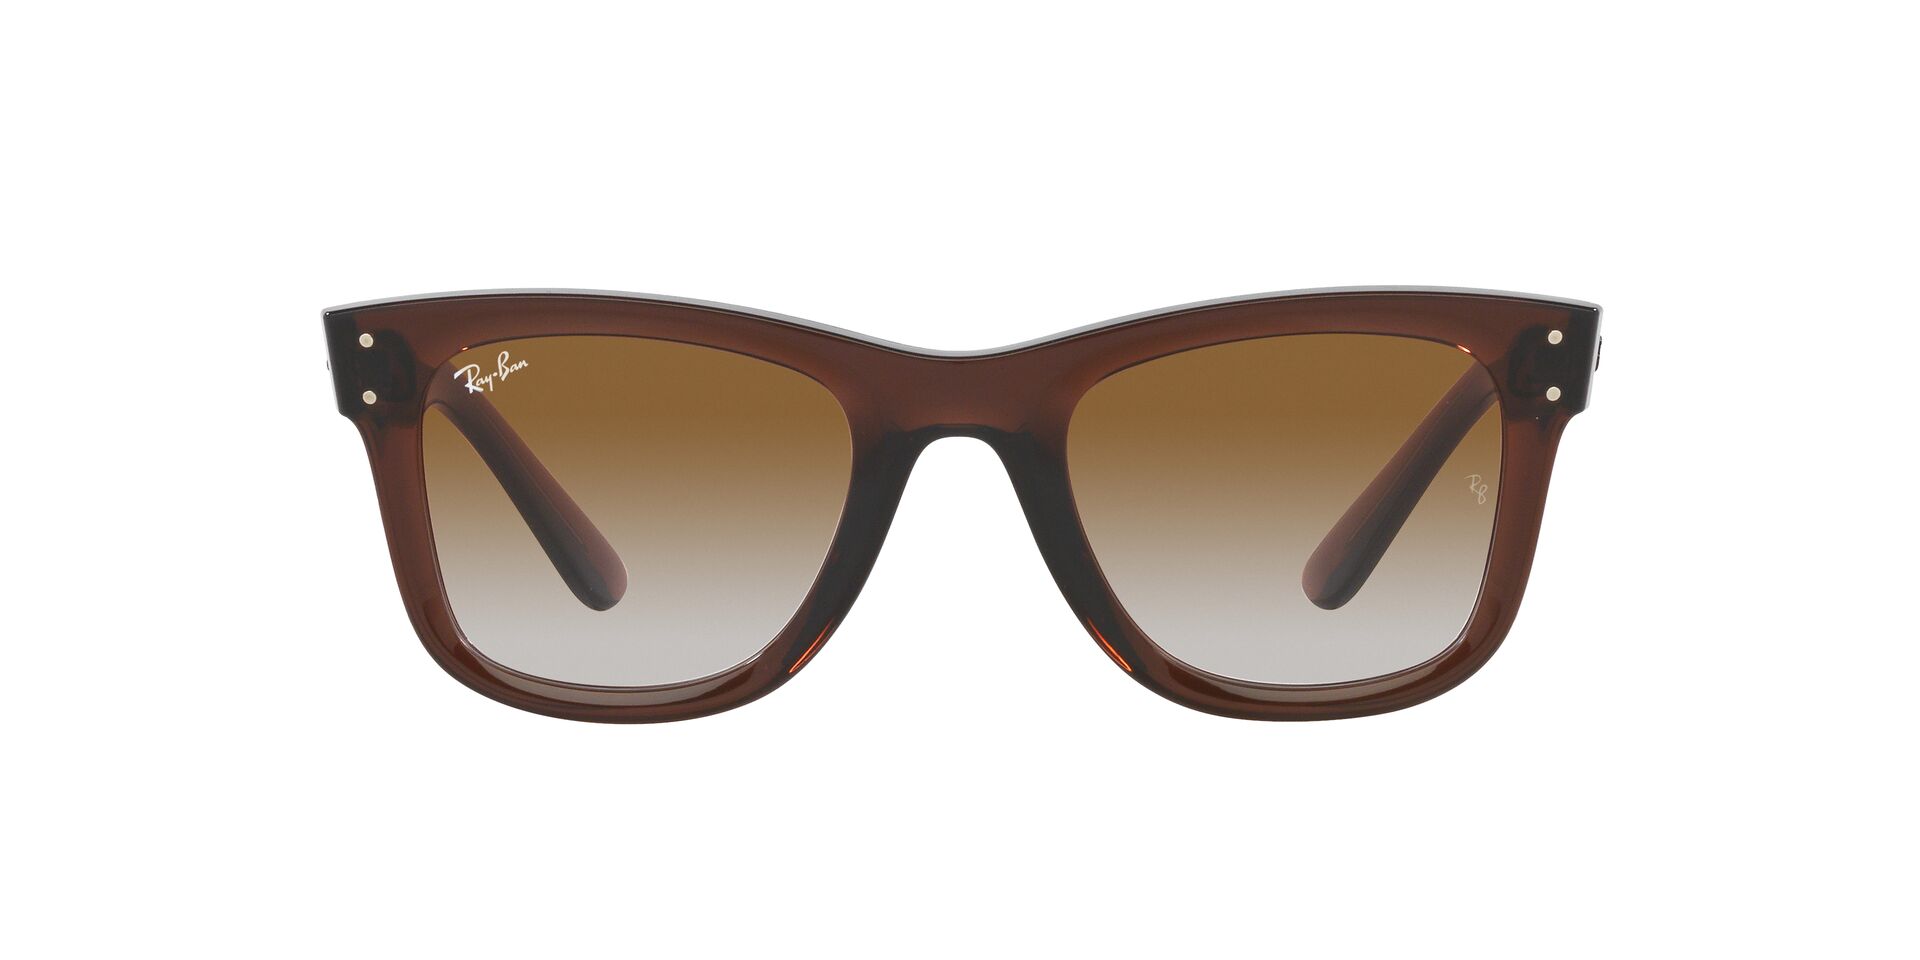 D&G First Copy Sunglasses Online - Designers Village